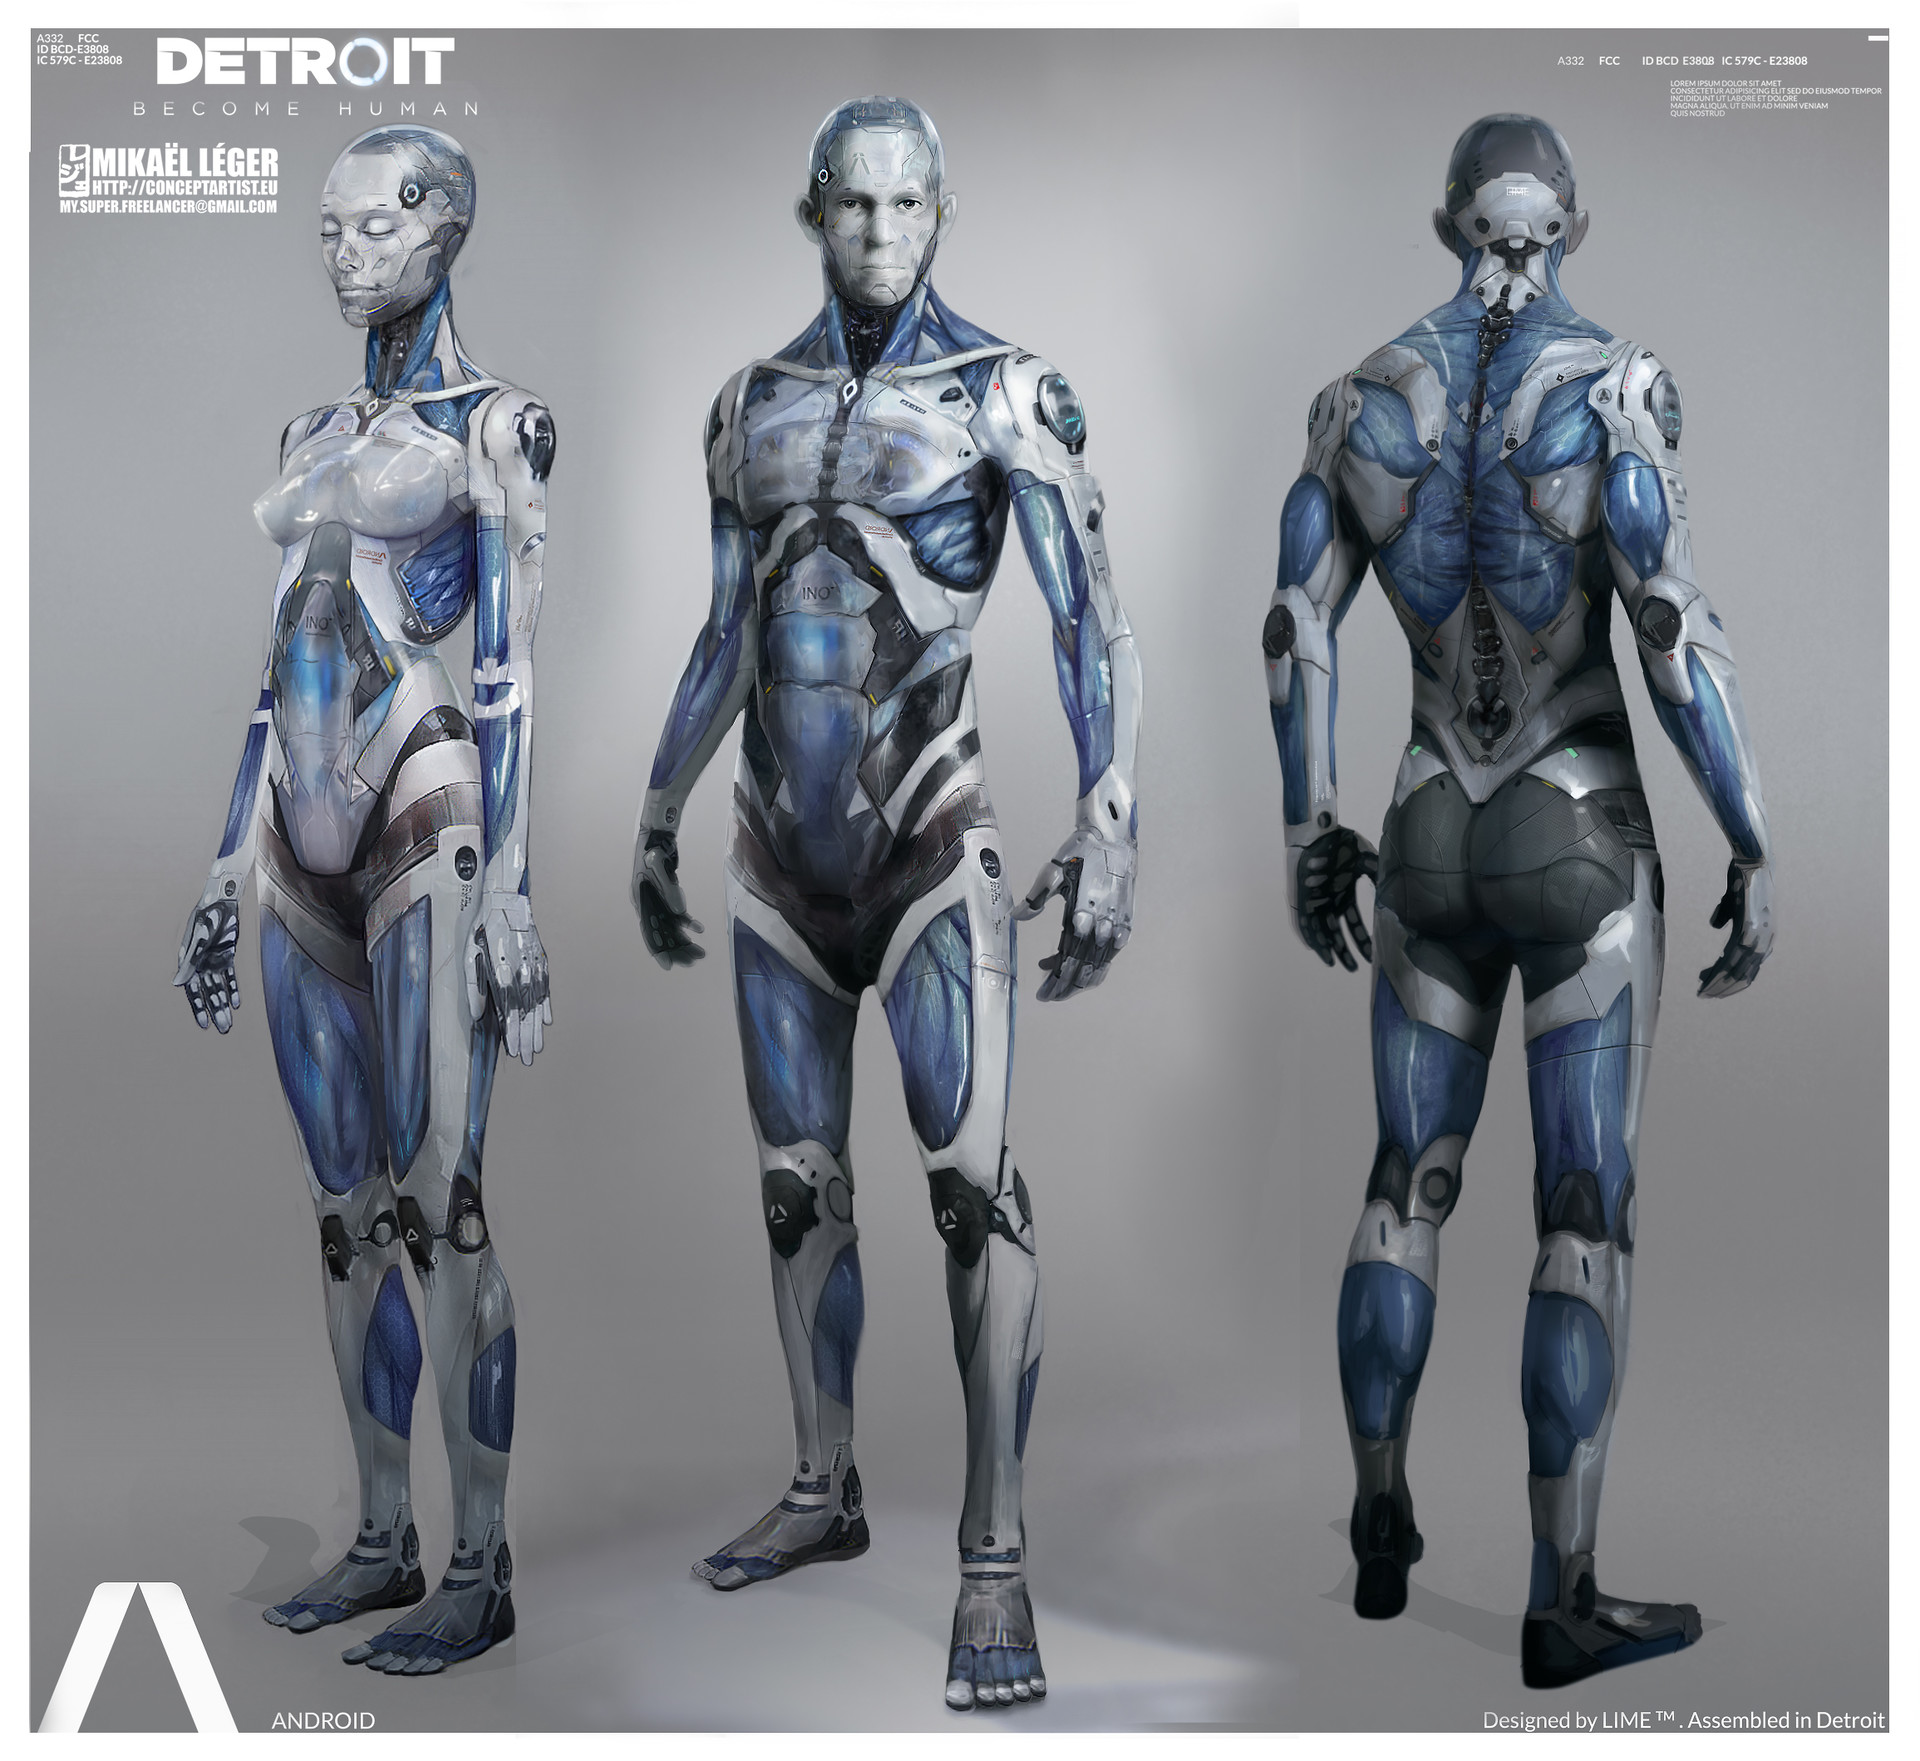 Markus Concept Art - Detroit: Become Human Art Gallery